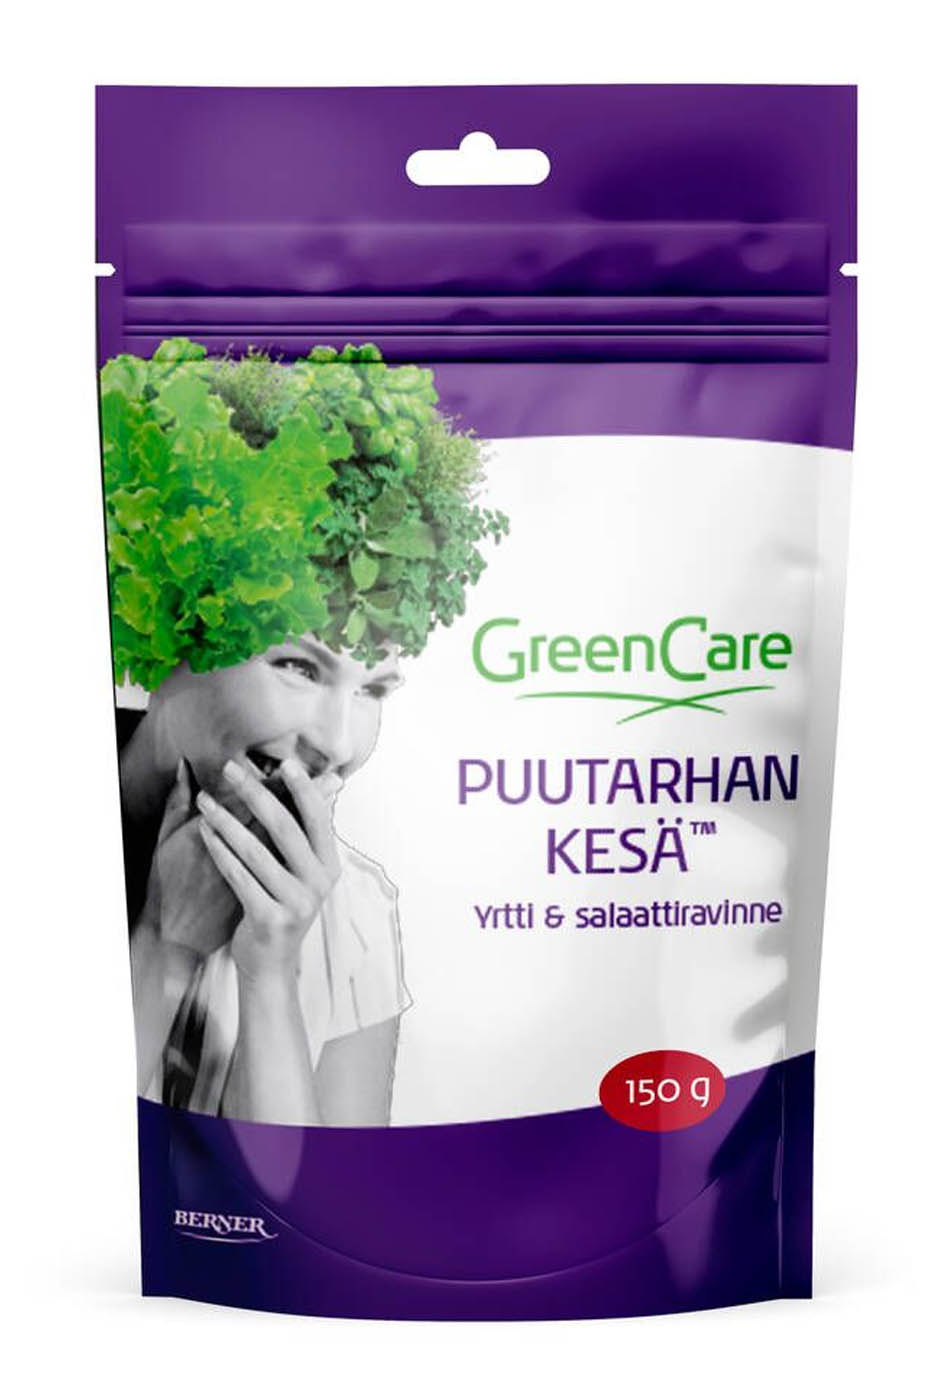 Green Care Puuthartan Kesä herb and salad nutrient 150g